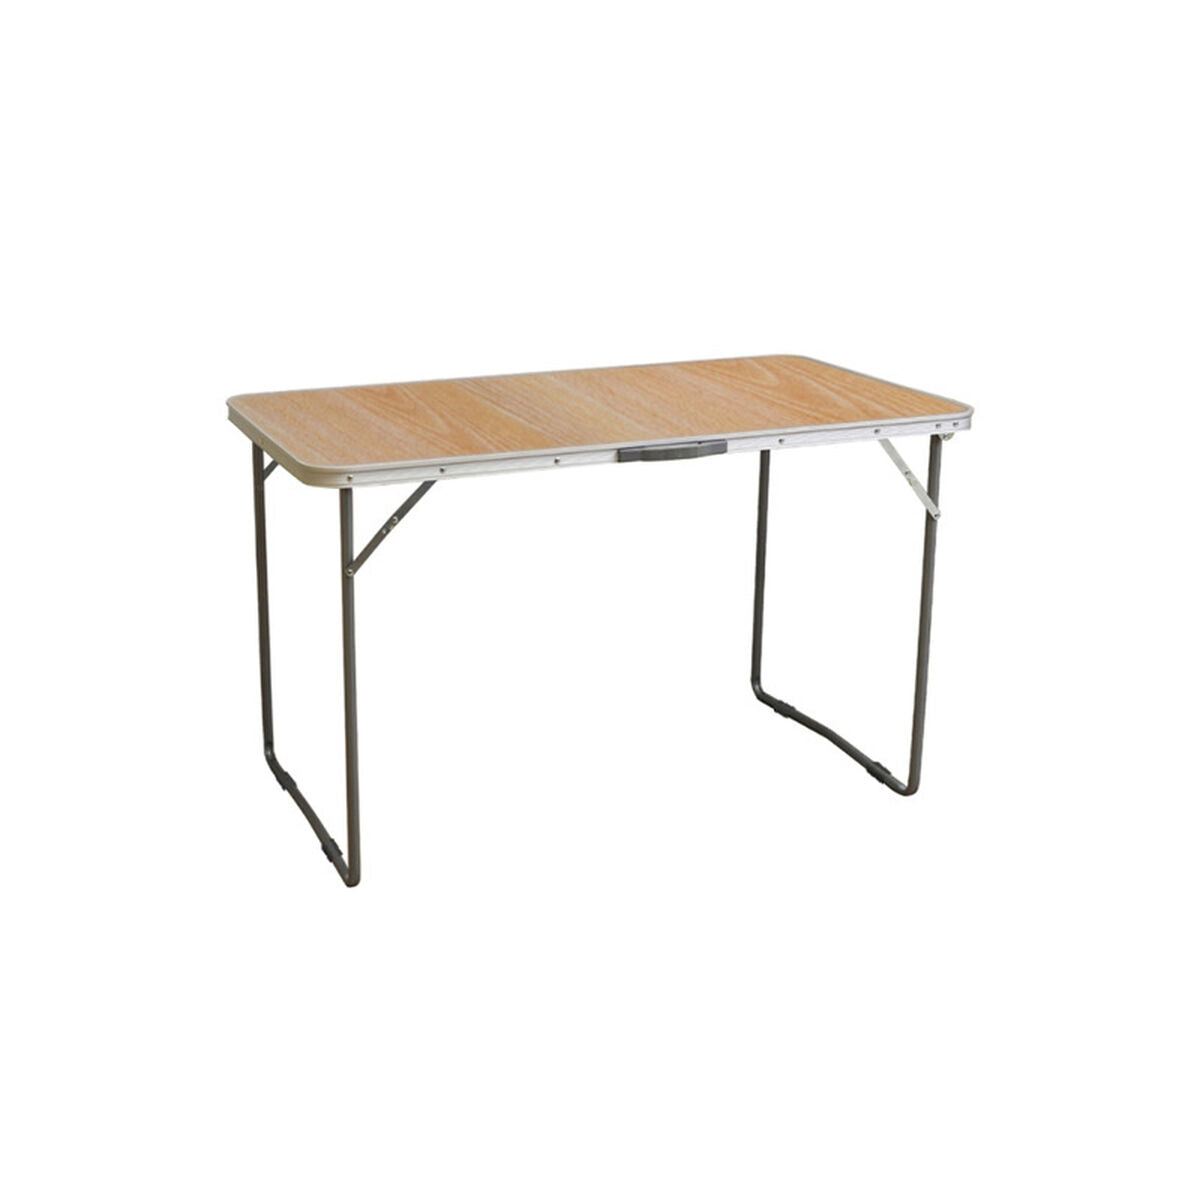 Table Piable Marbueno 120 x 70 x 60 cm